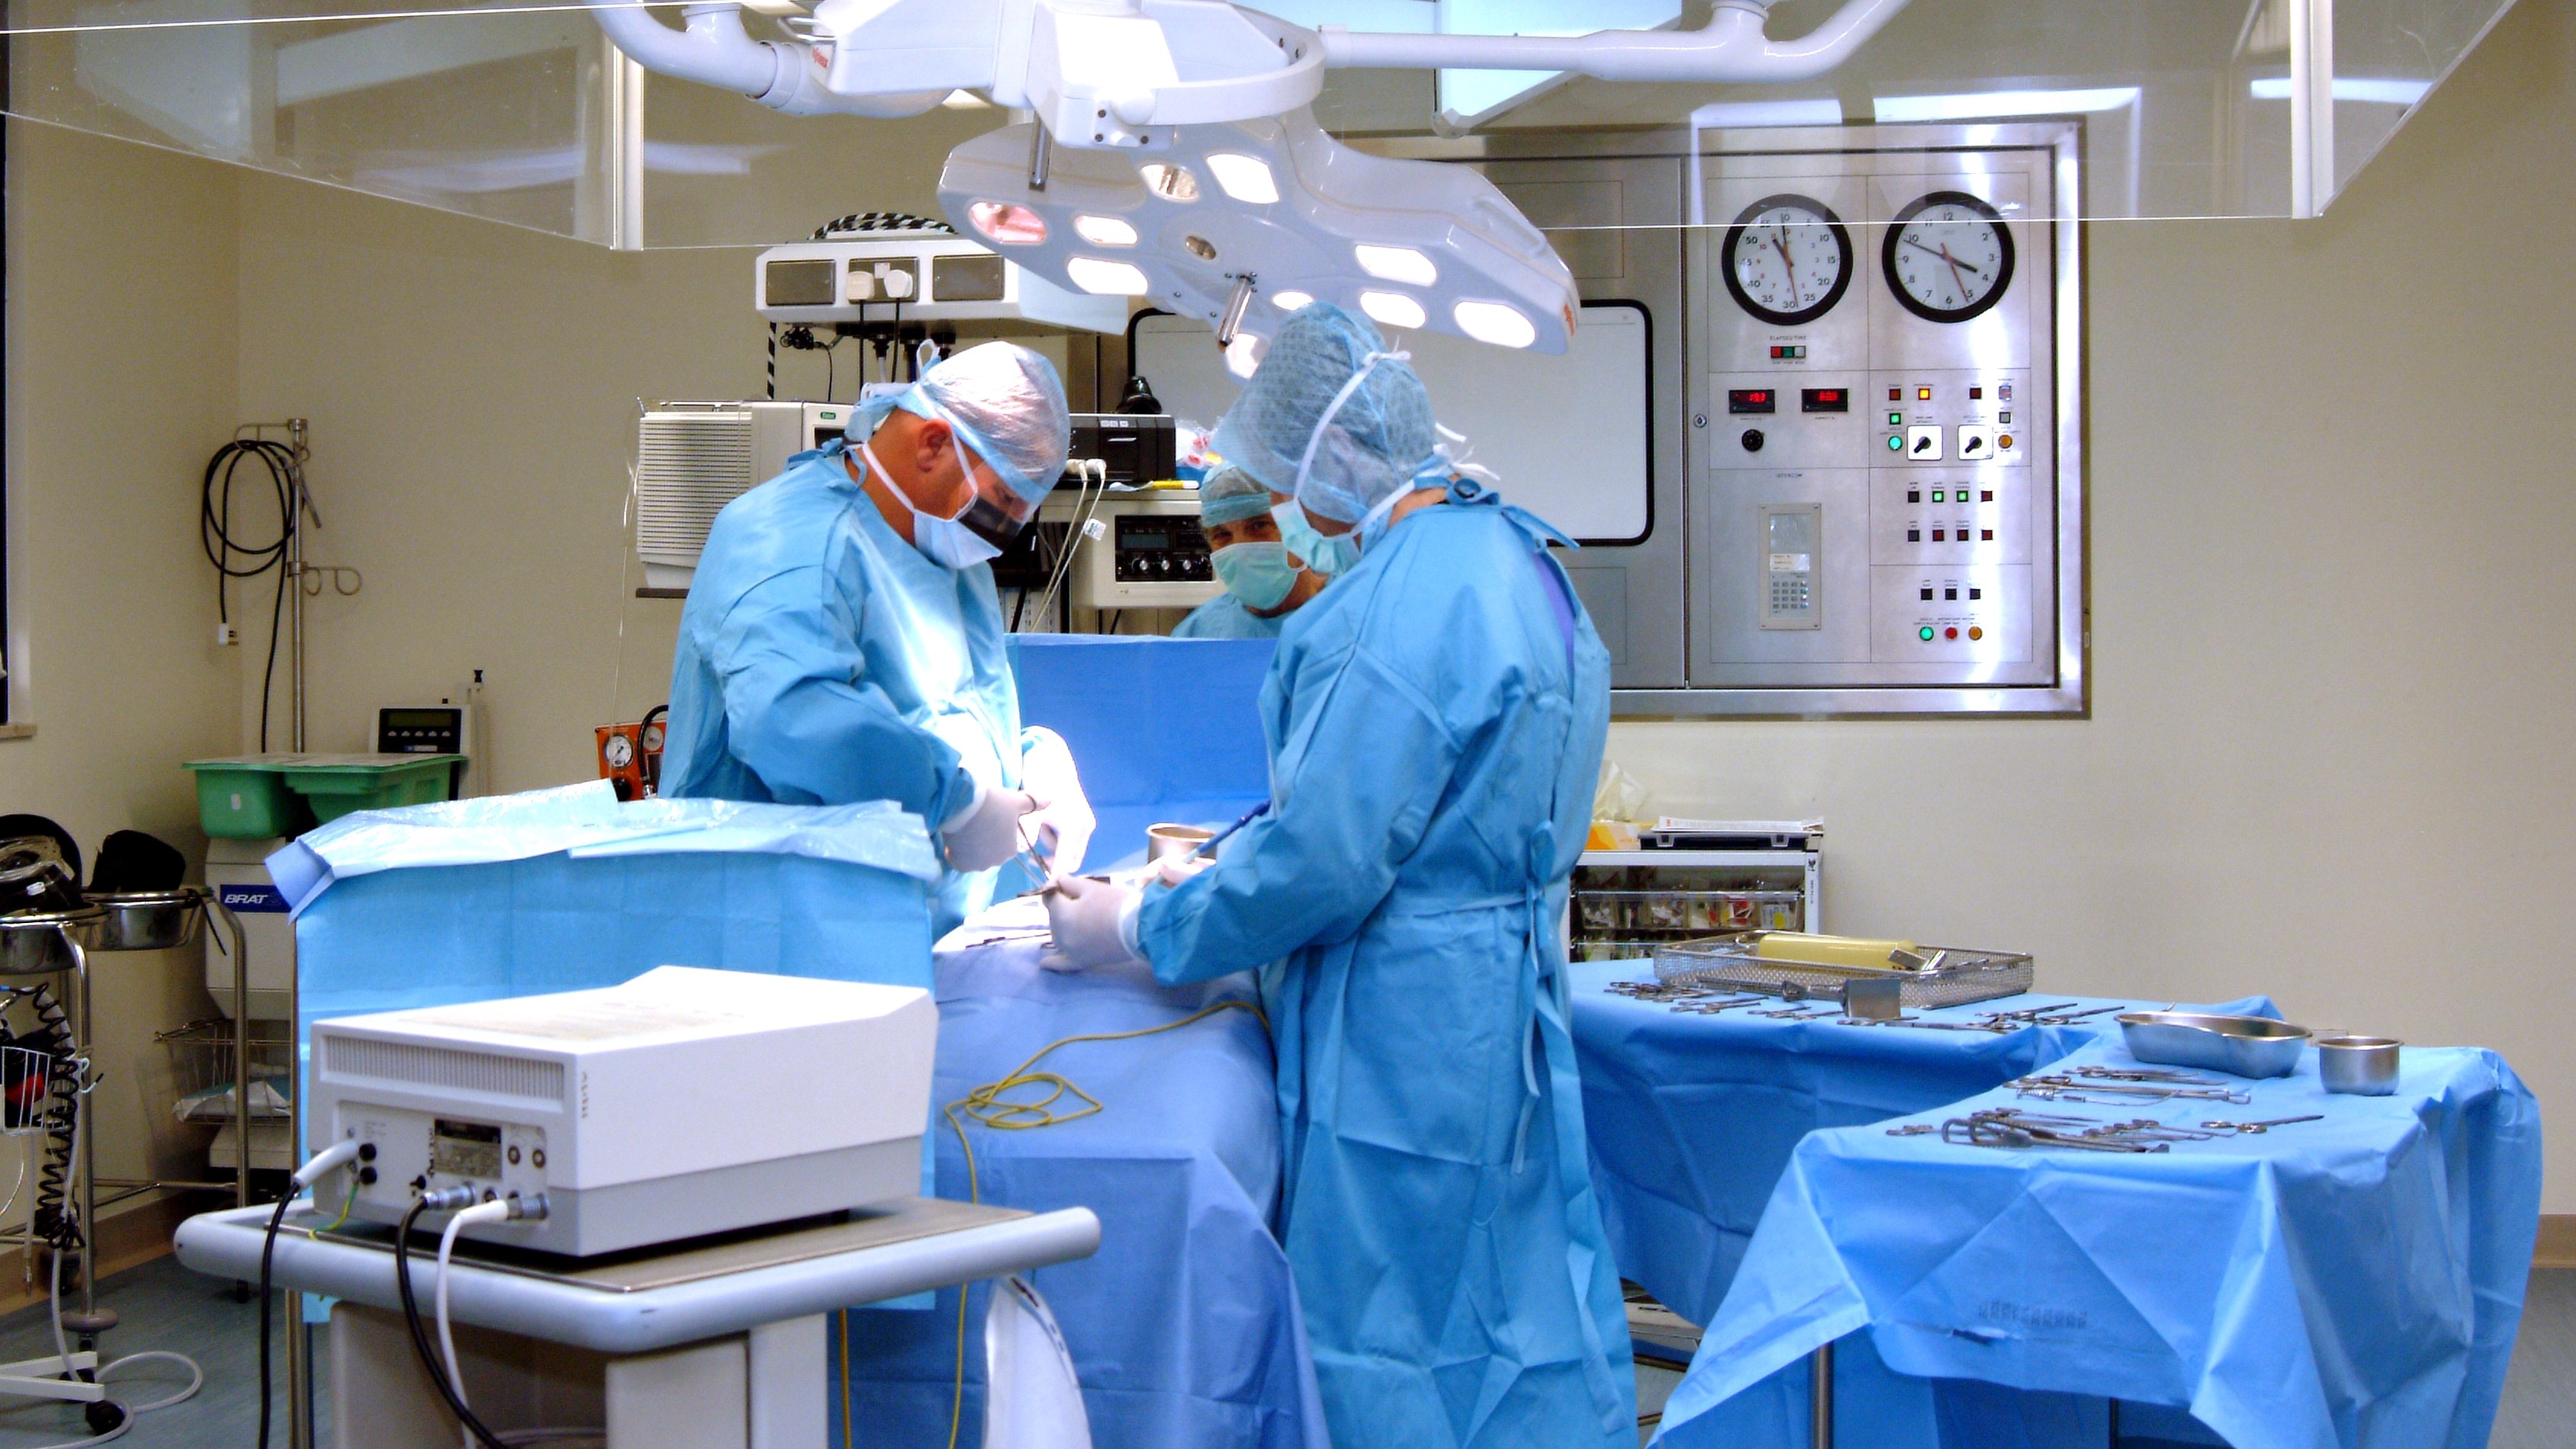 Septoplasty Surgery in Iran